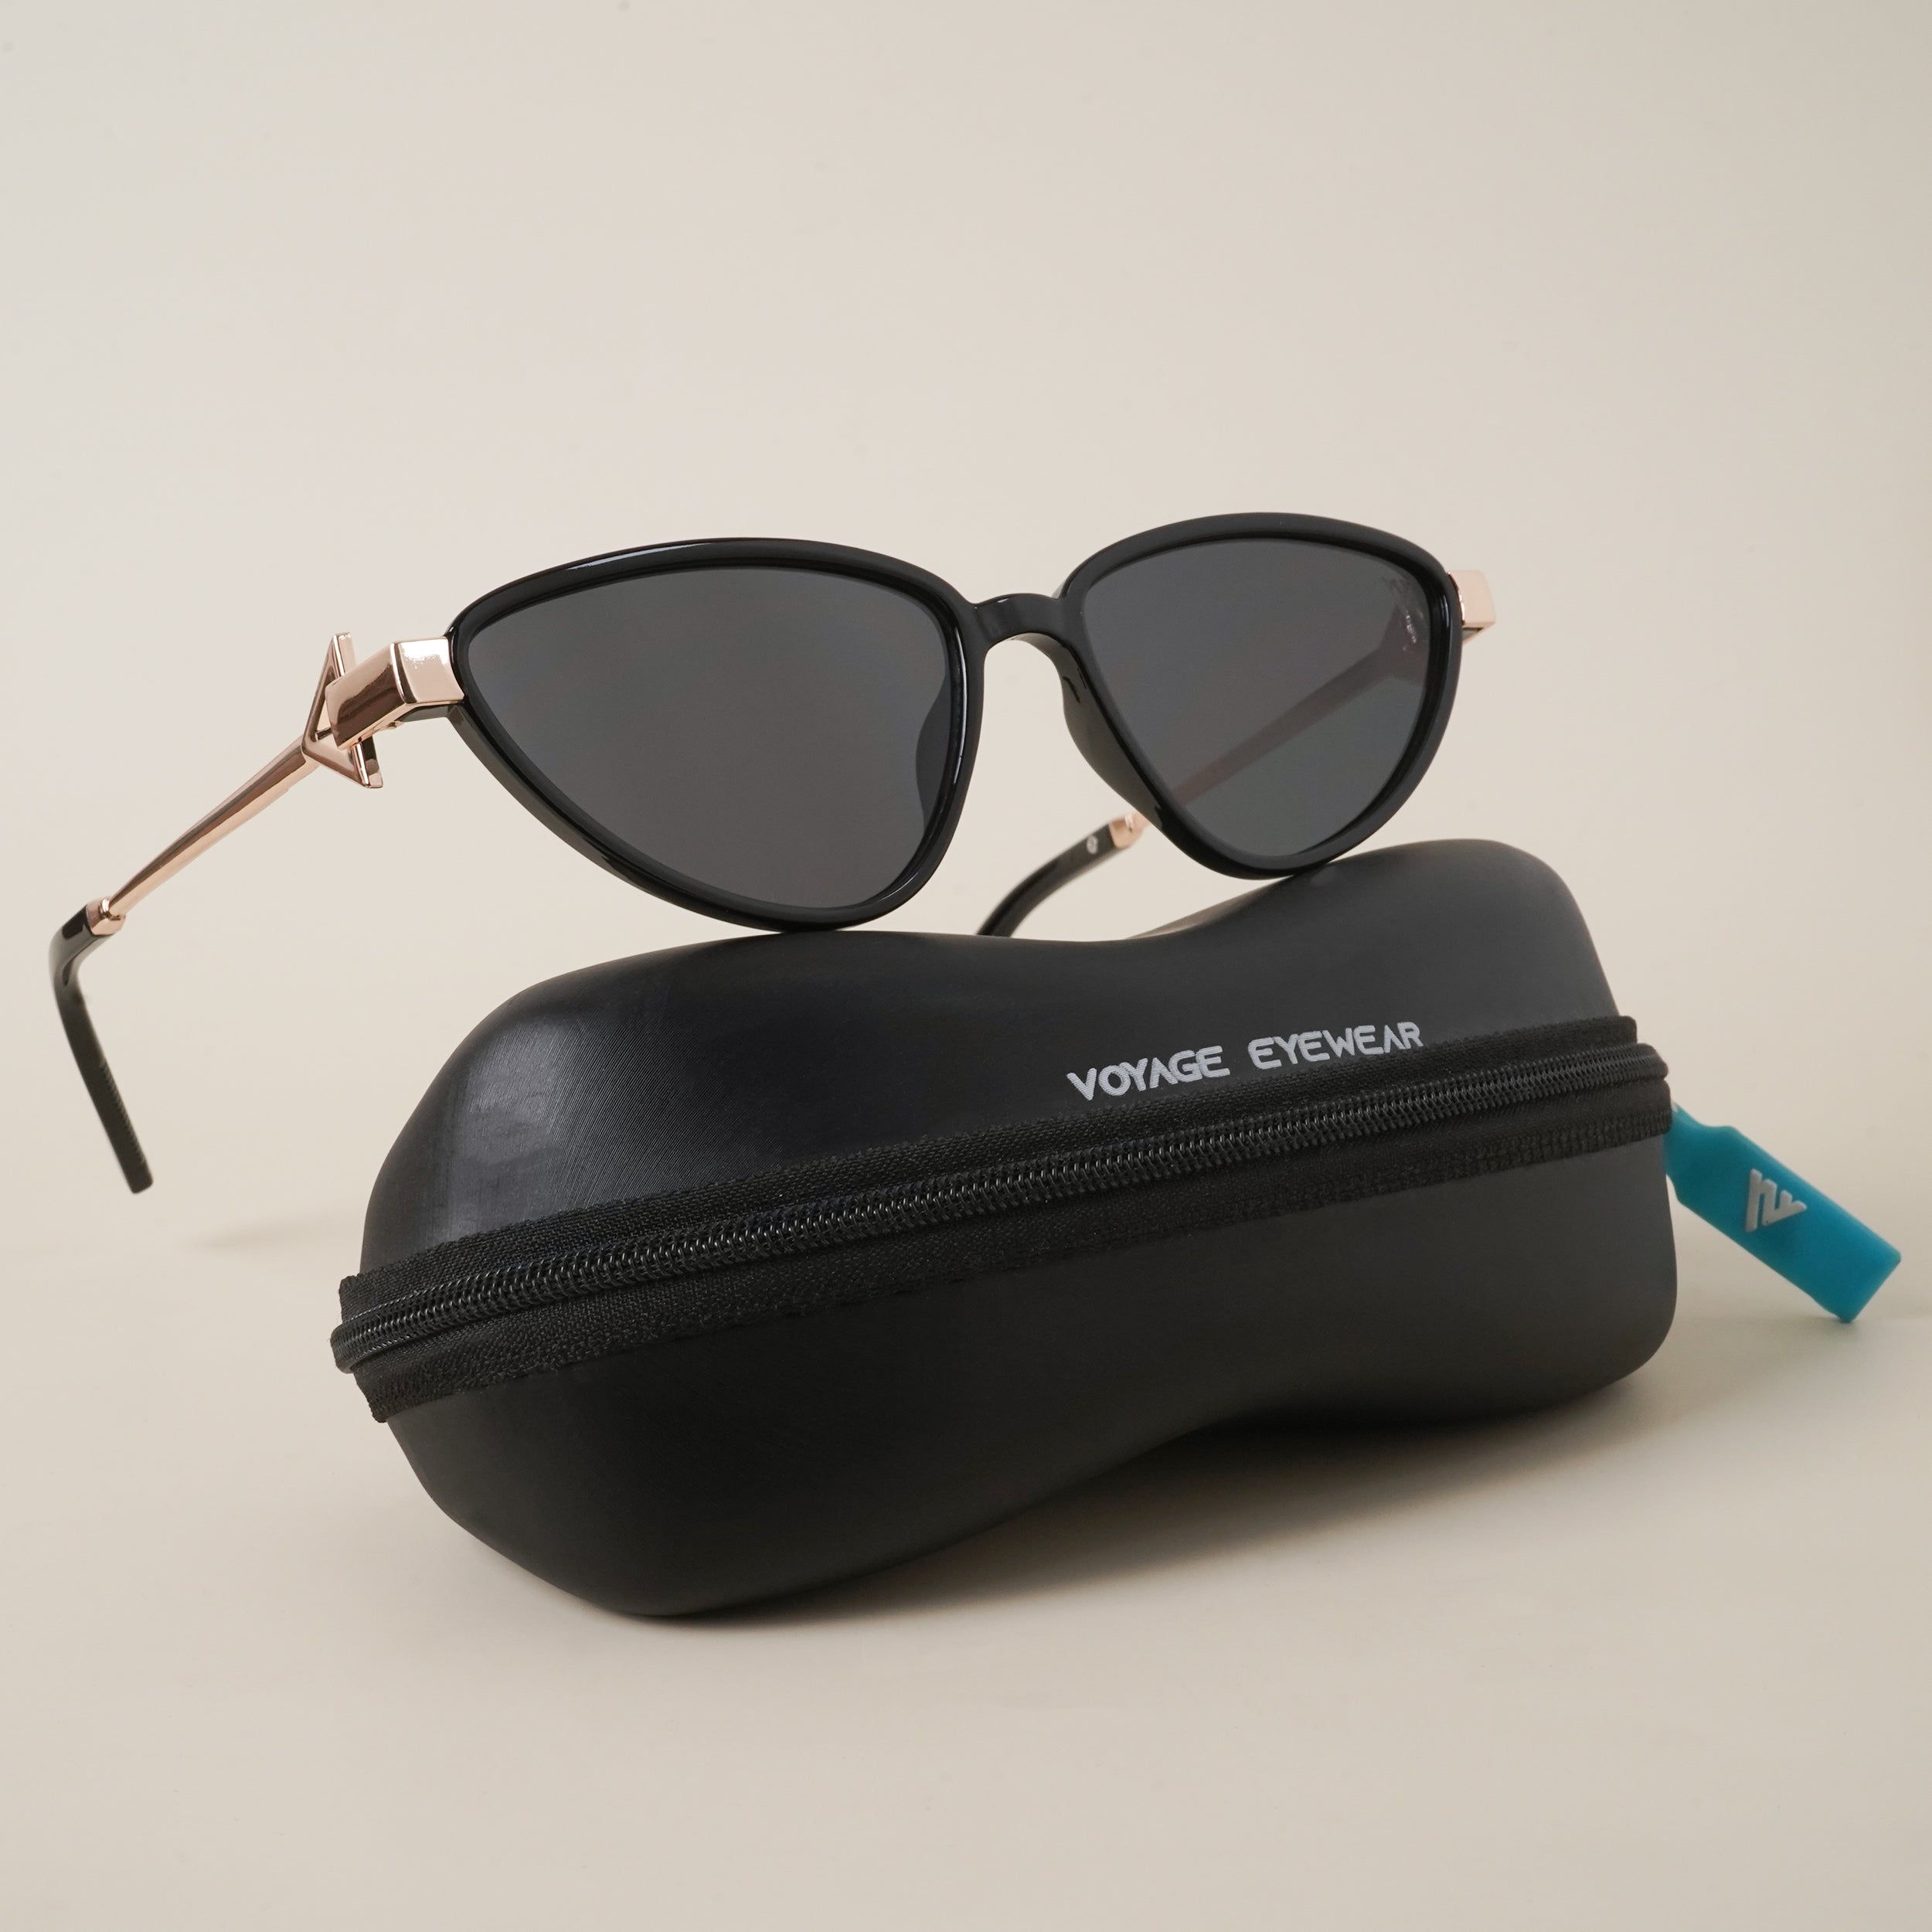 Voyage Black Cateye Sunglasses for Women (LH066MG3983)